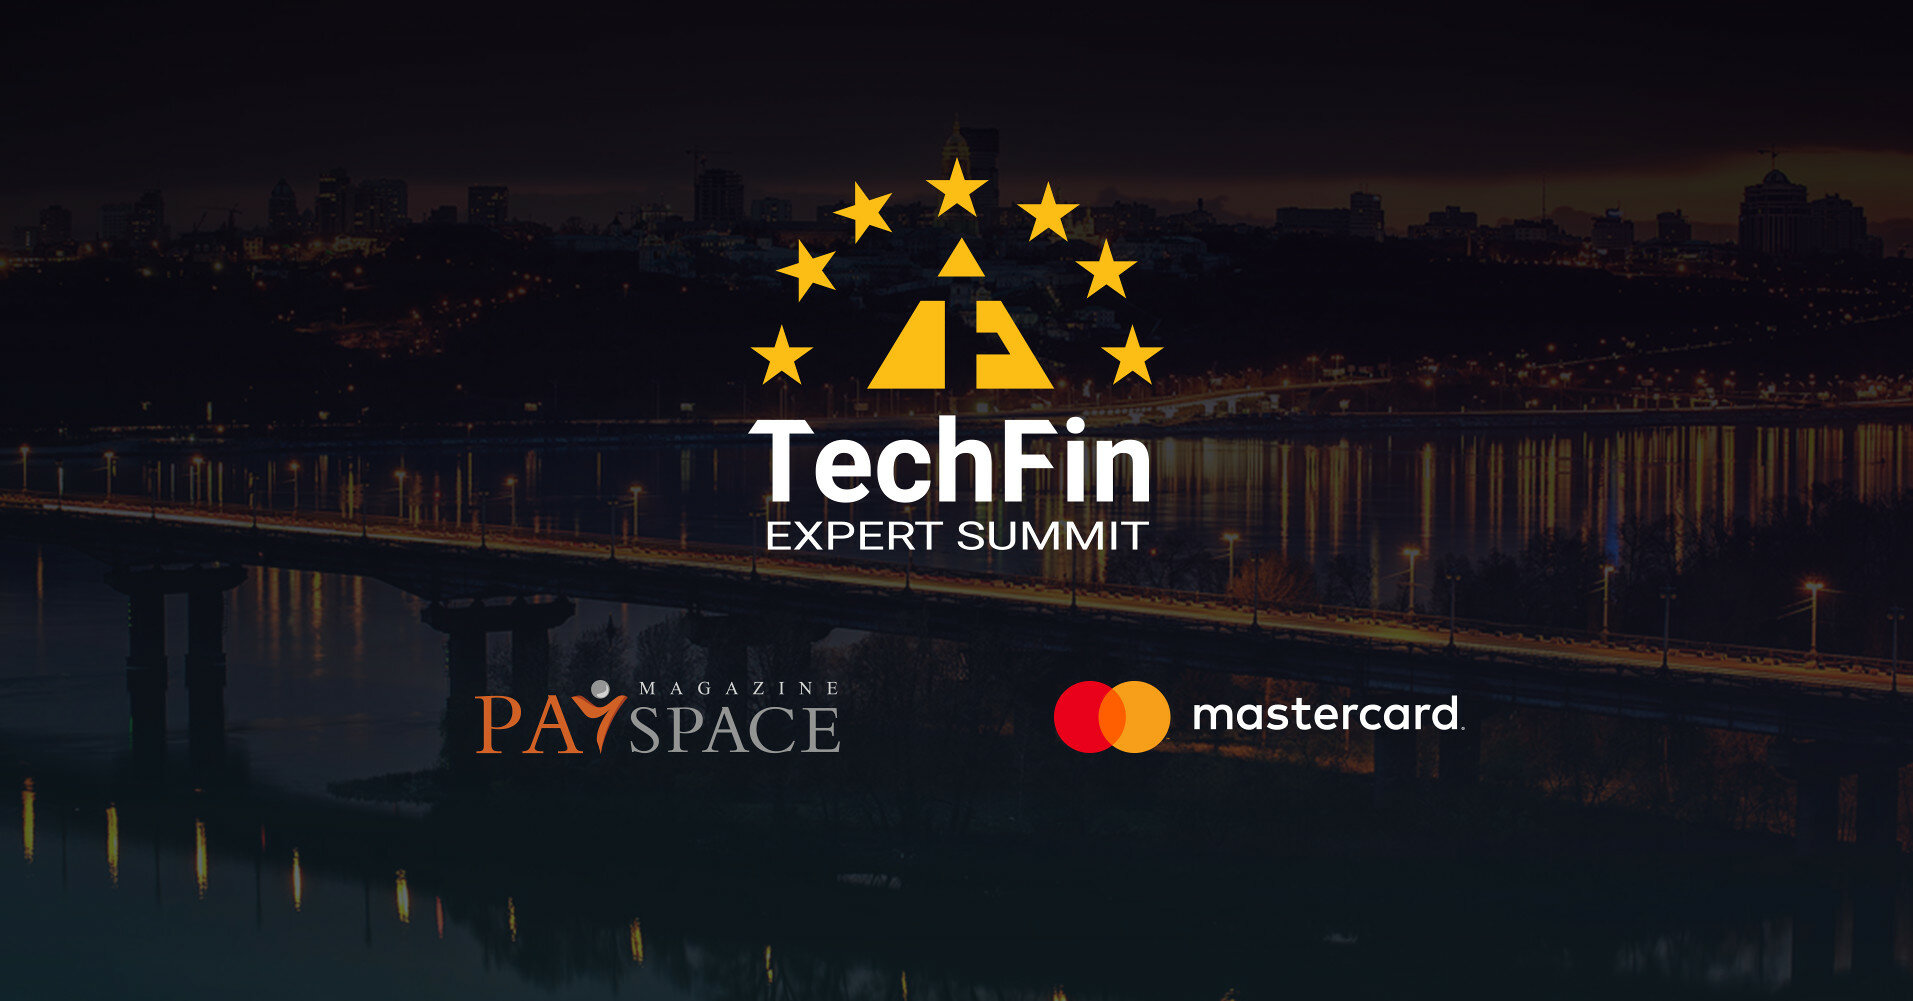 PaySpace  Magazine вперше організовує TechFin Expert Summit у Києві 22 липня